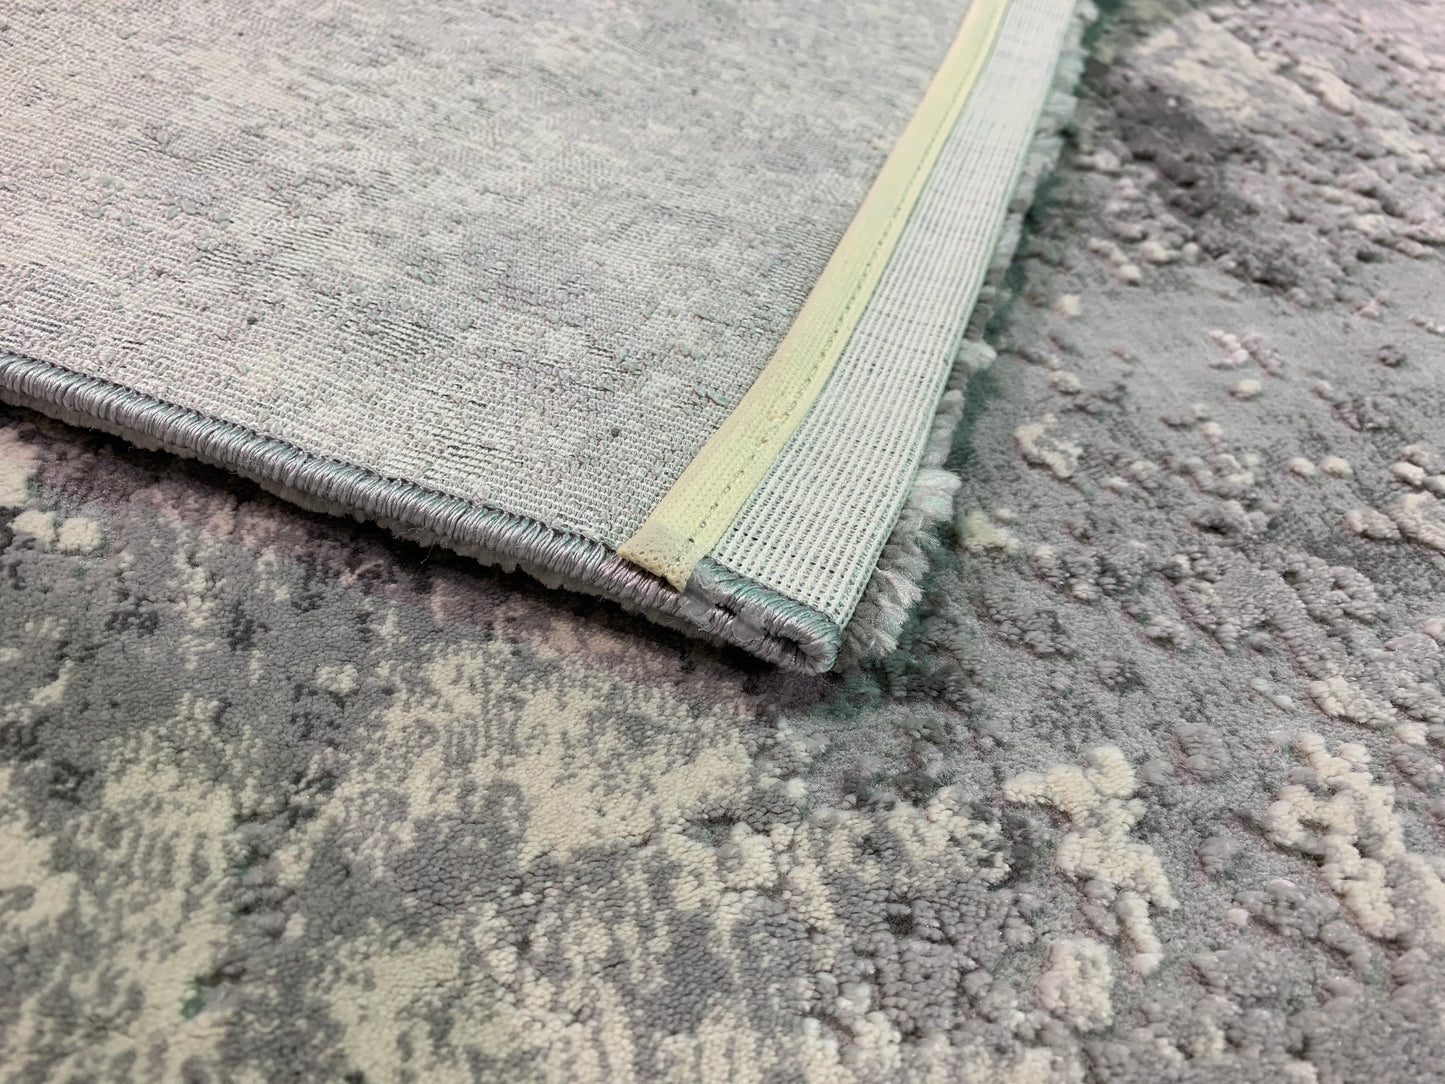 FL-401: Synthetic fiber rug